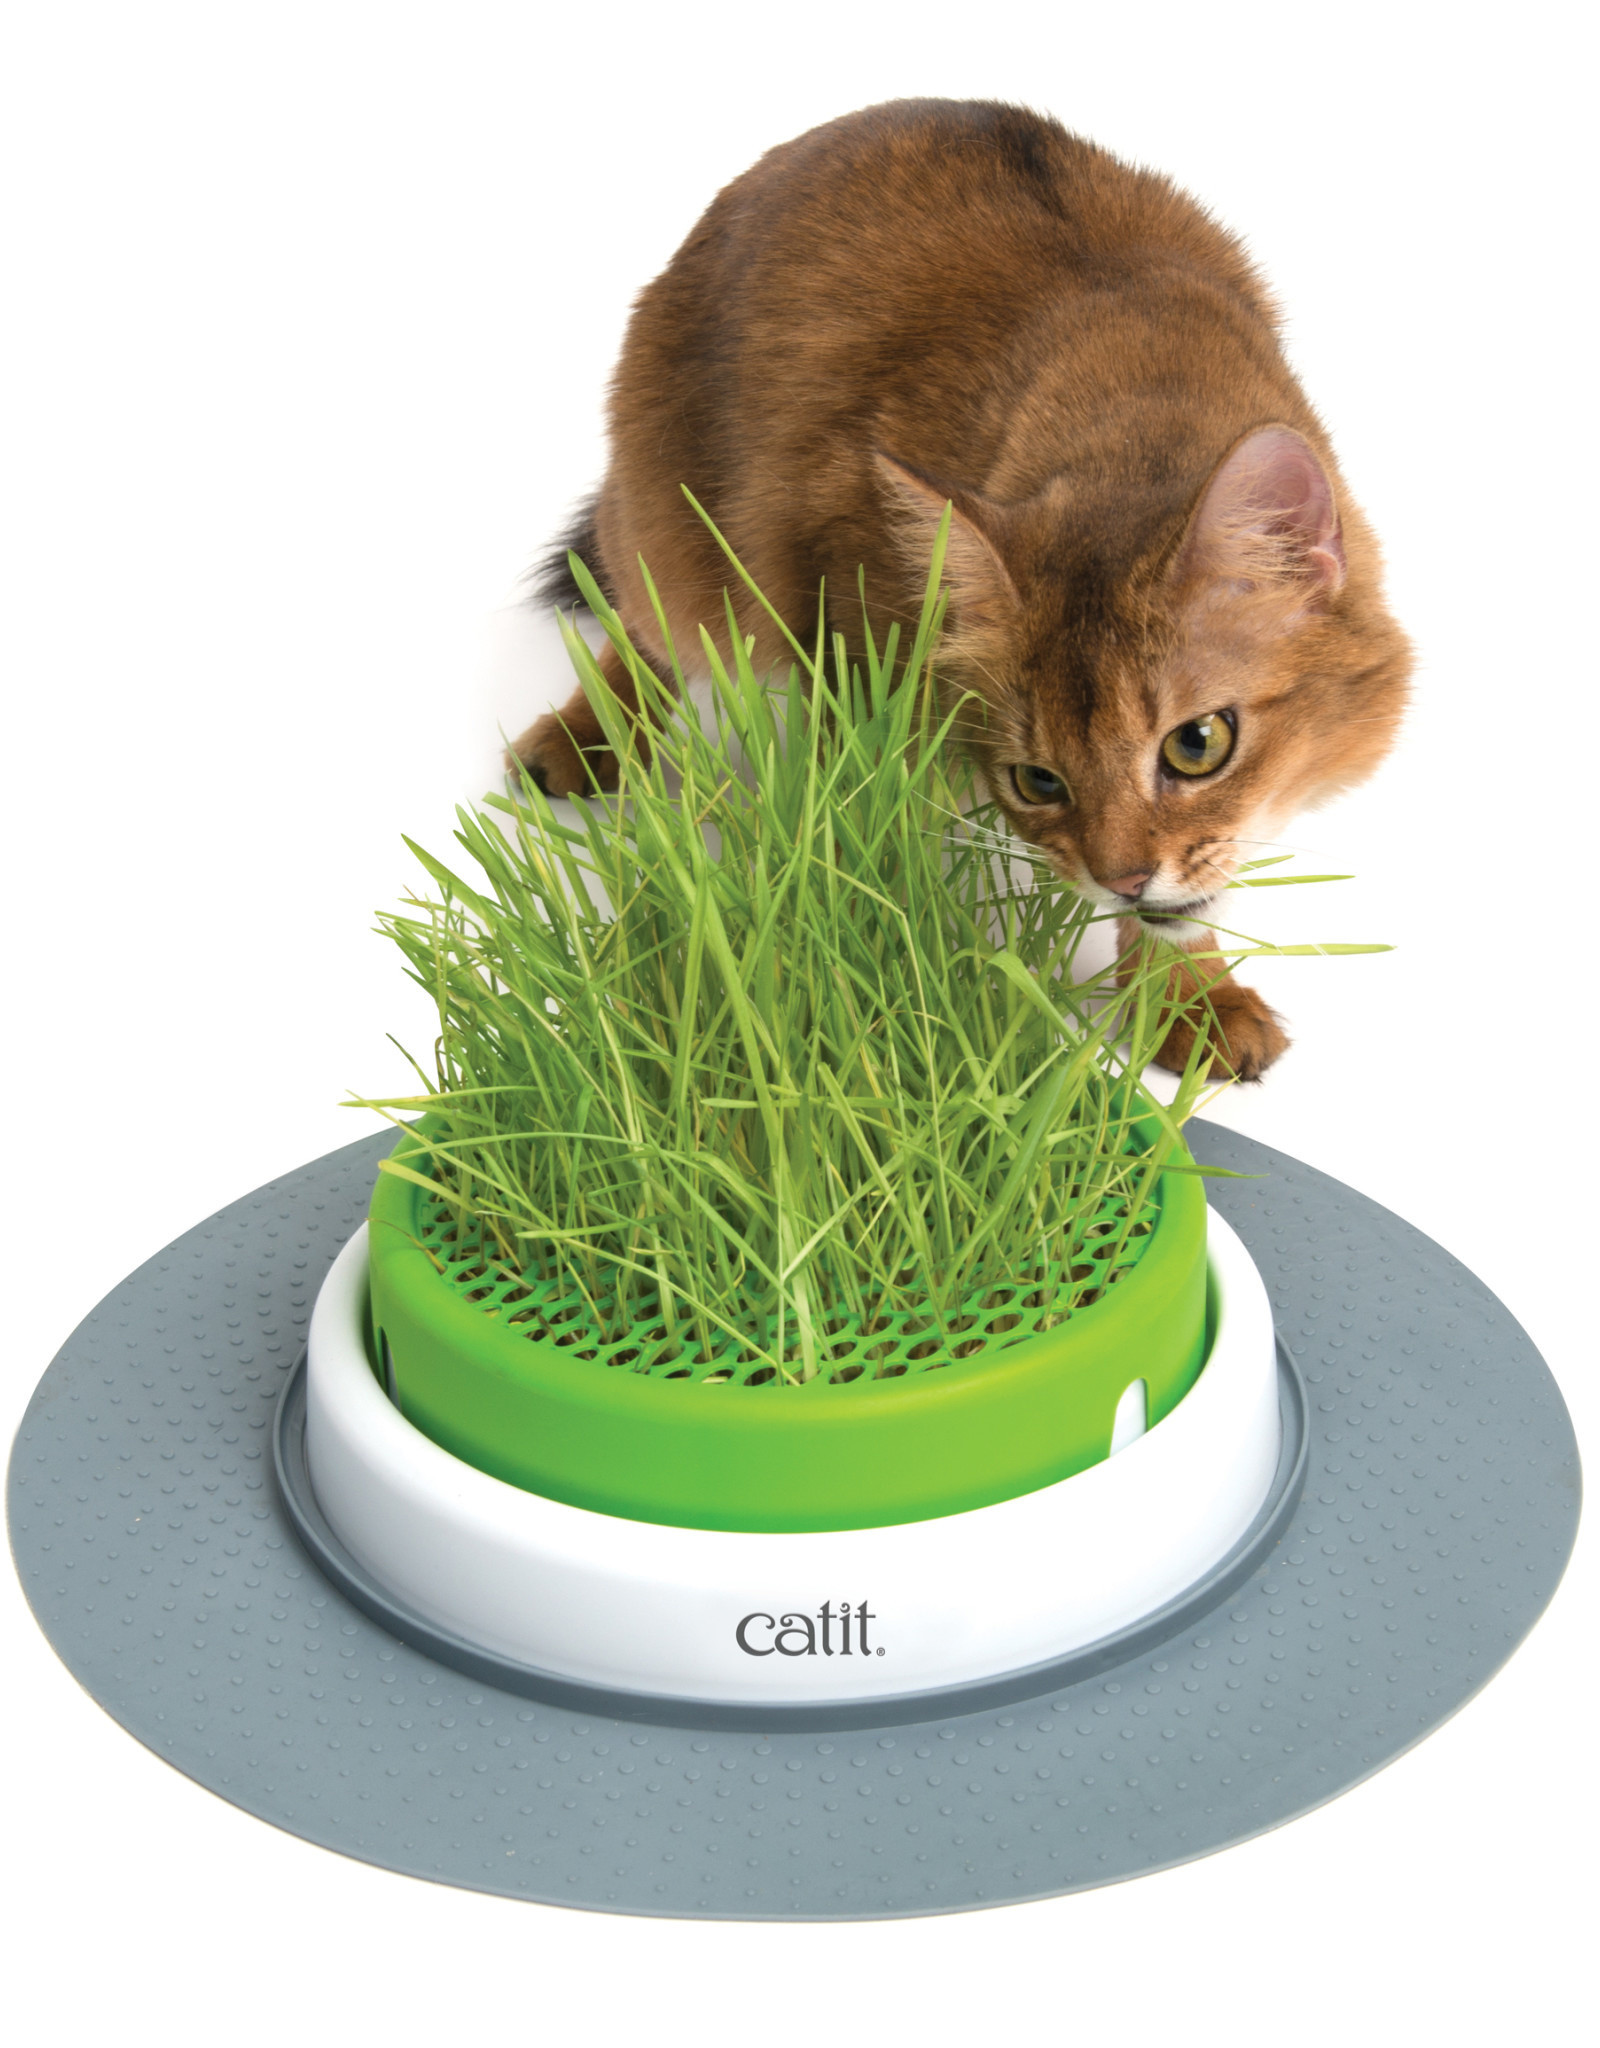 Hagen Catit Senses 2.0 grass planter